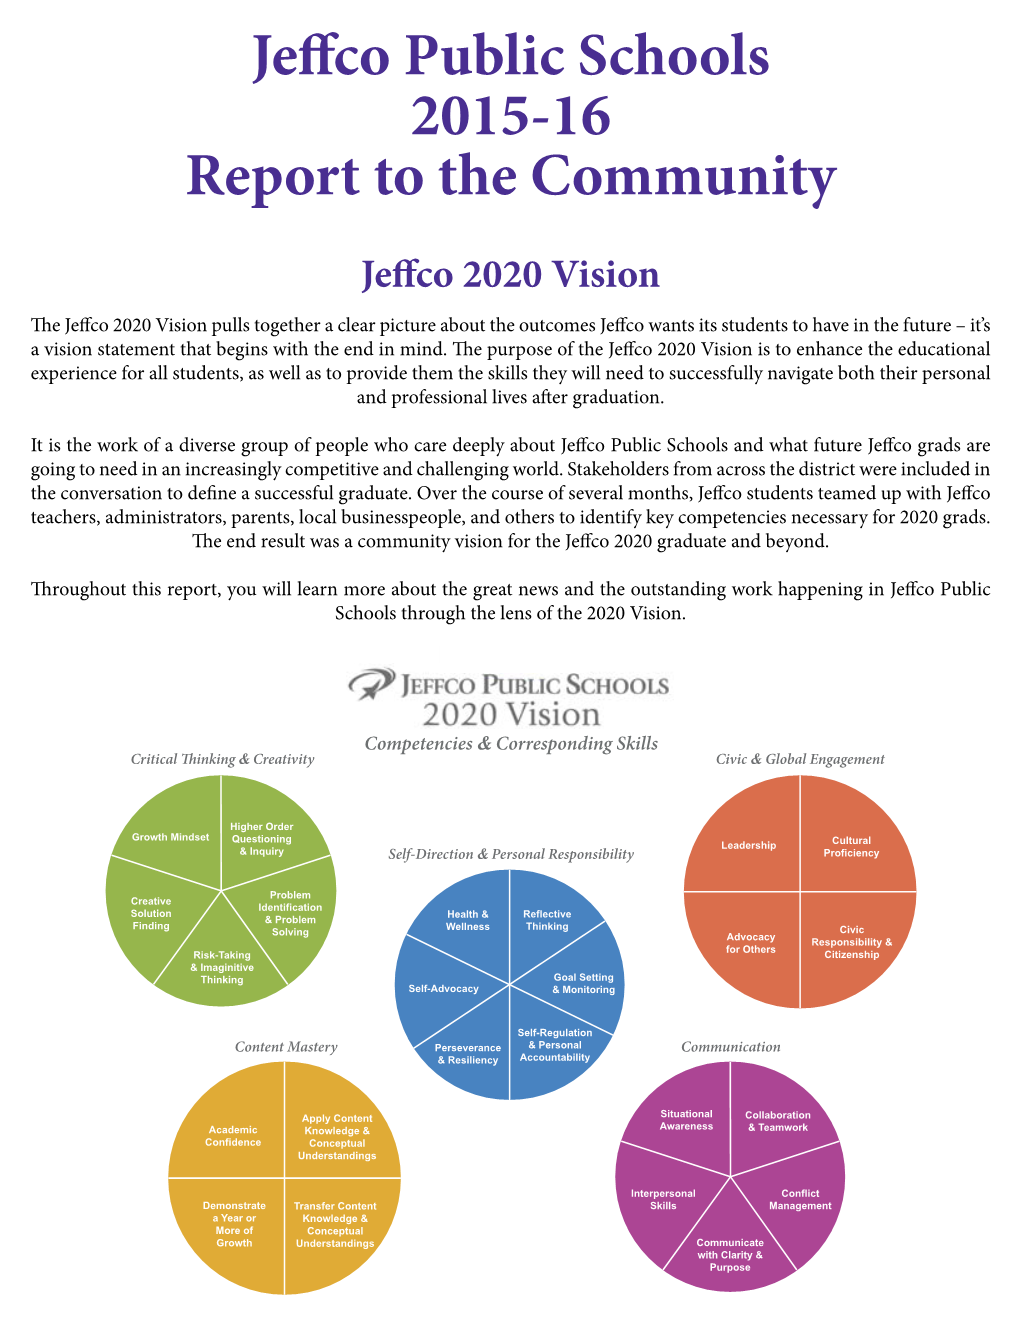 Jeffco Public Schools 2015-16 Report to the Community